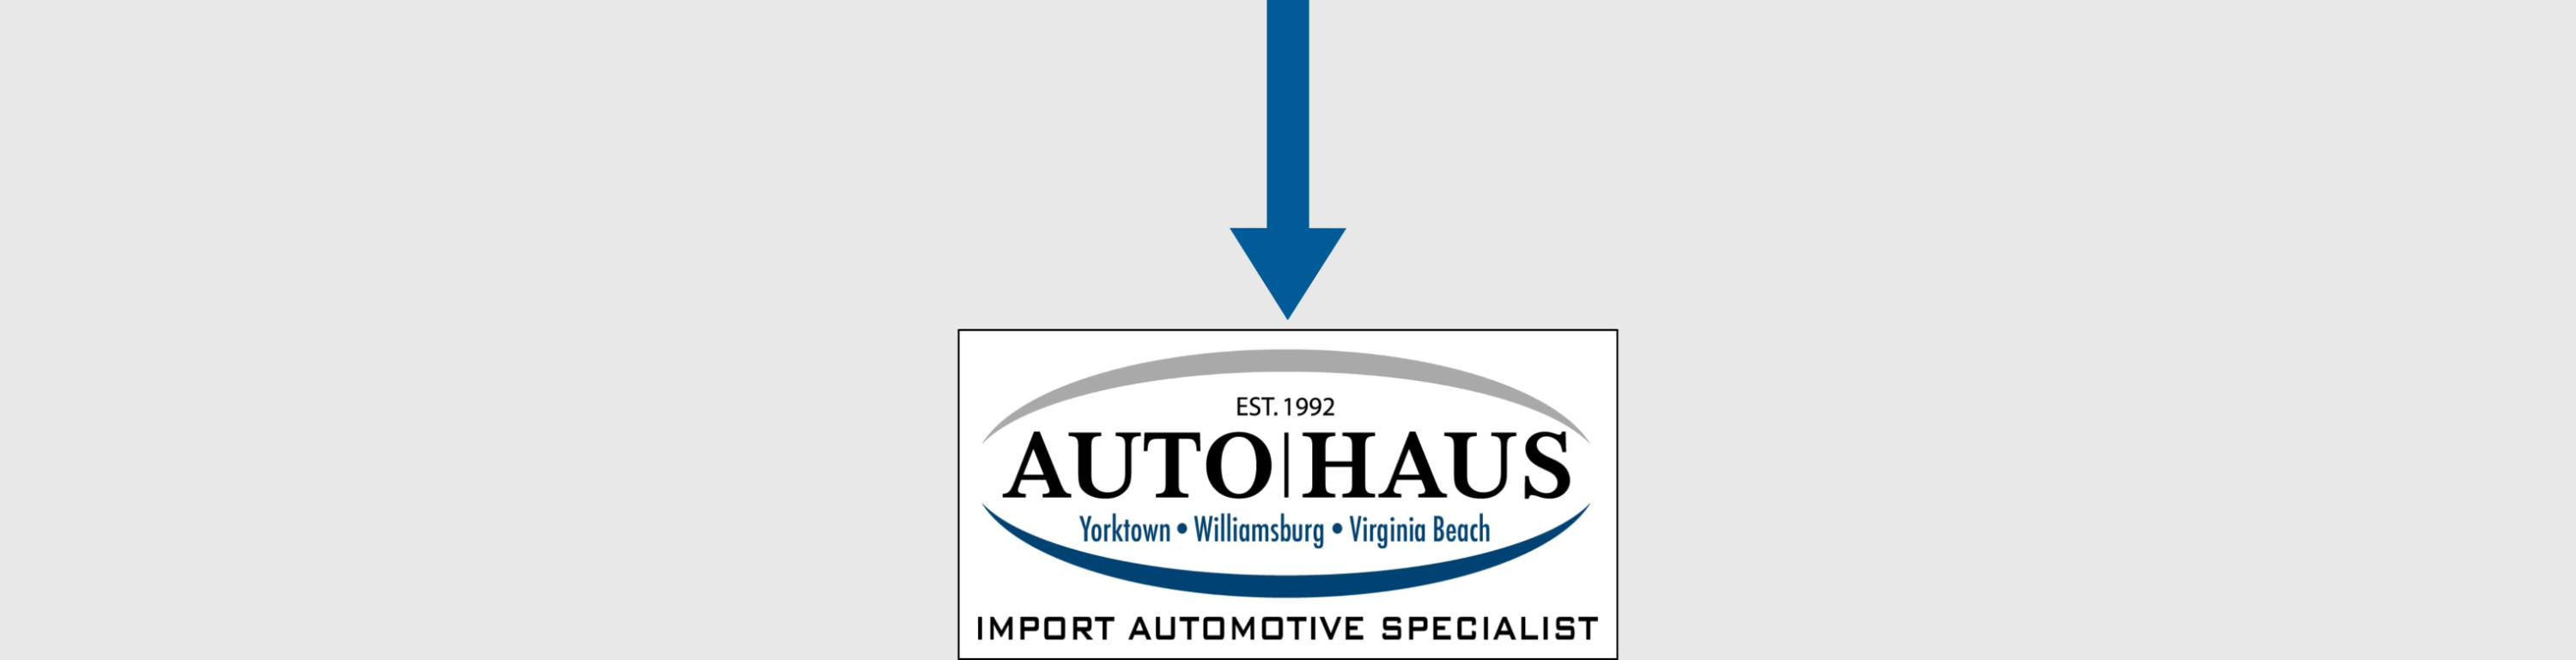 Auto Haus of Virginia History Image for Logo